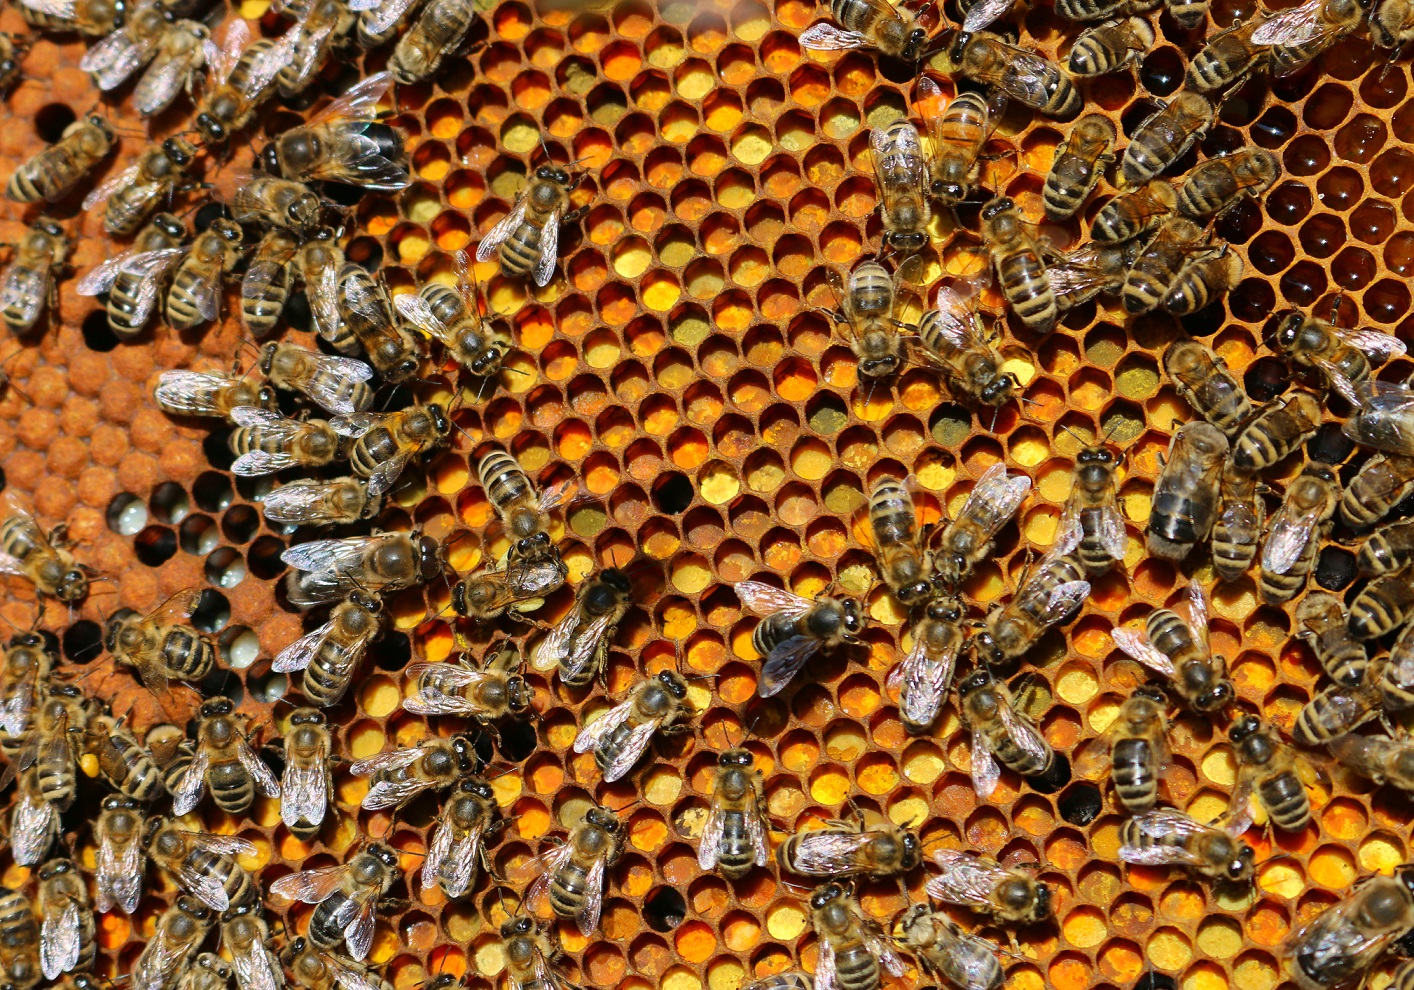 pszczoly2